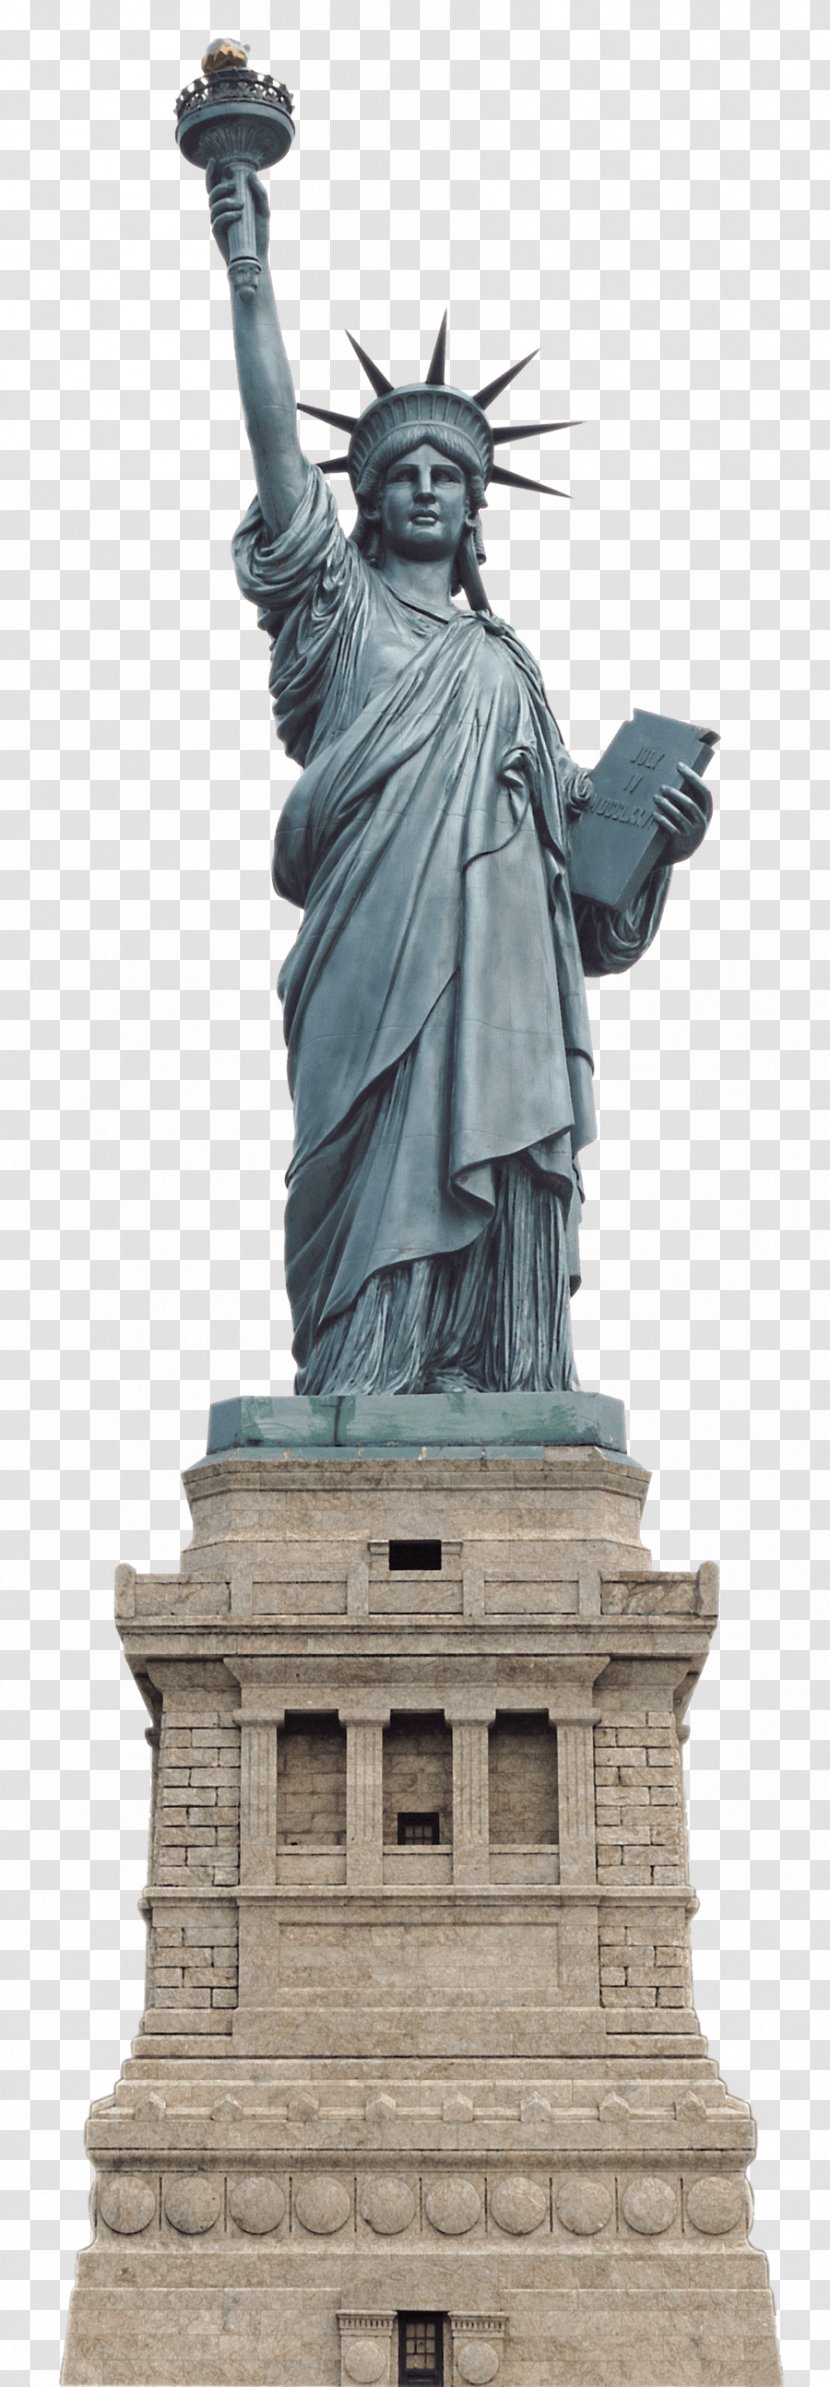 Statue Of Liberty Monument Clip Art - National Historic Landmark Transparent PNG